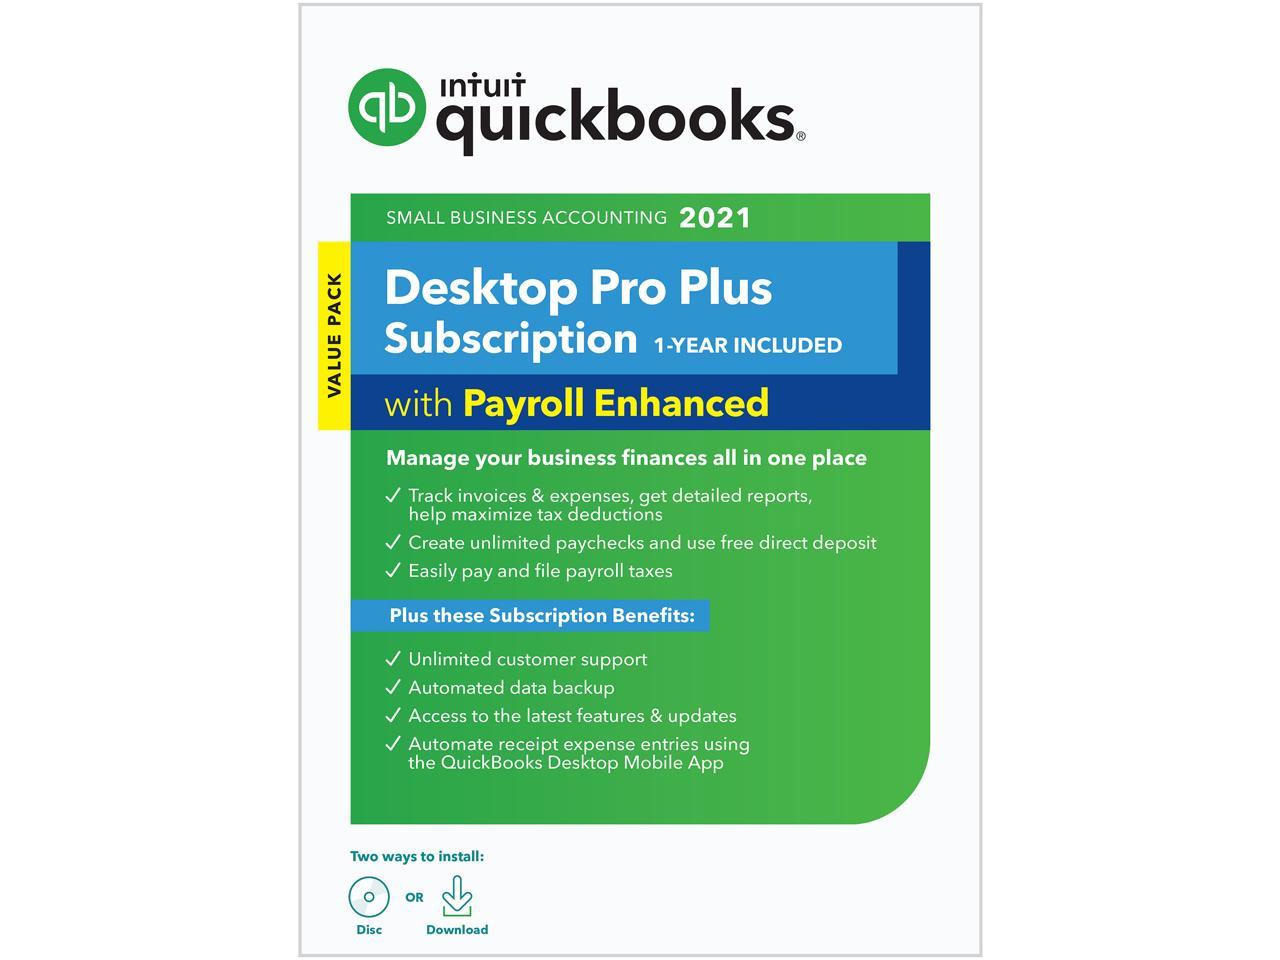 quickbooks desktop payroll enhanced for accountants